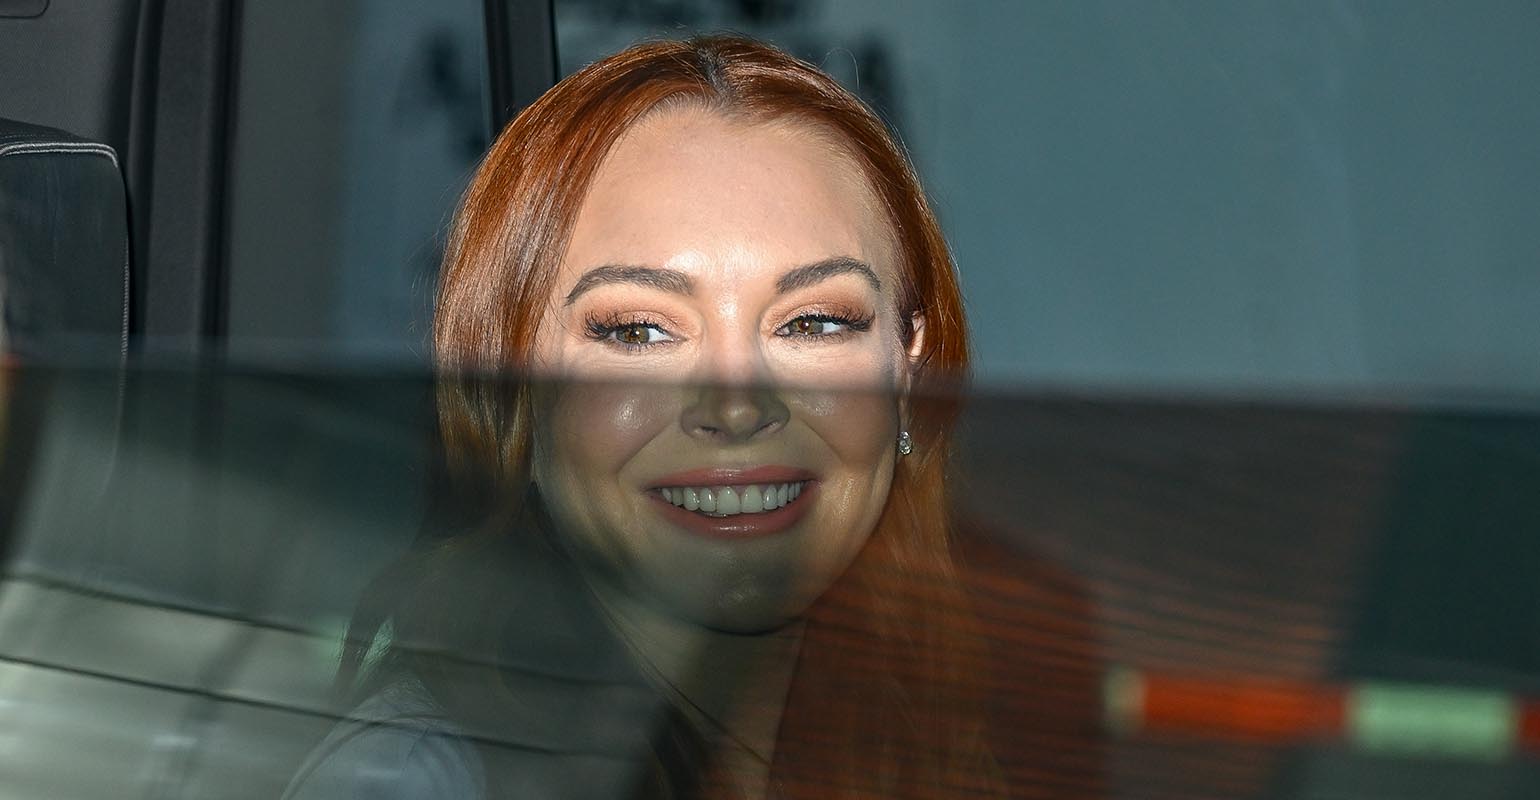 SEC Charges Lindsay Lohan, Soulja Boy for Touting Crypto